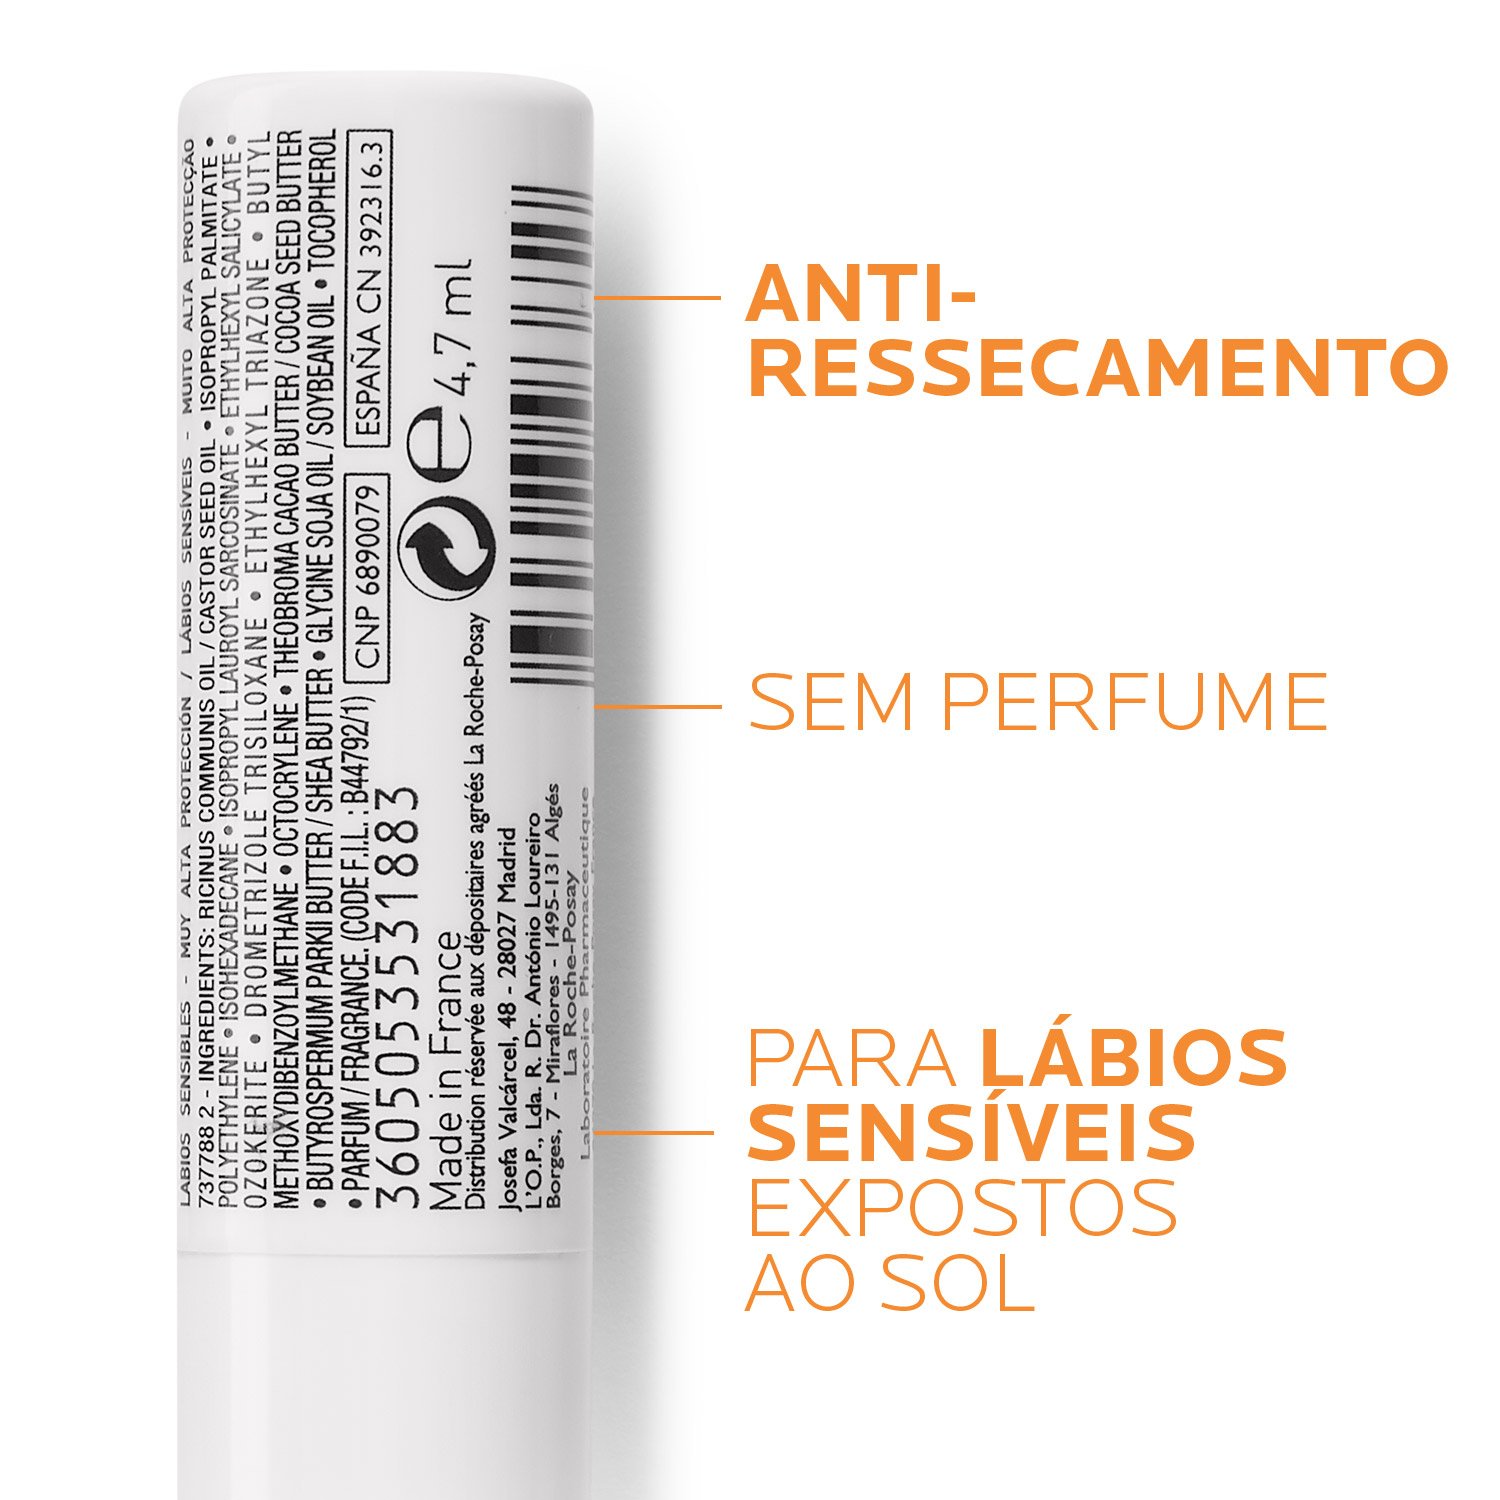 La Roche Posay ProductPage Sun Anthelios XL Stick Sensitive Area Spf50